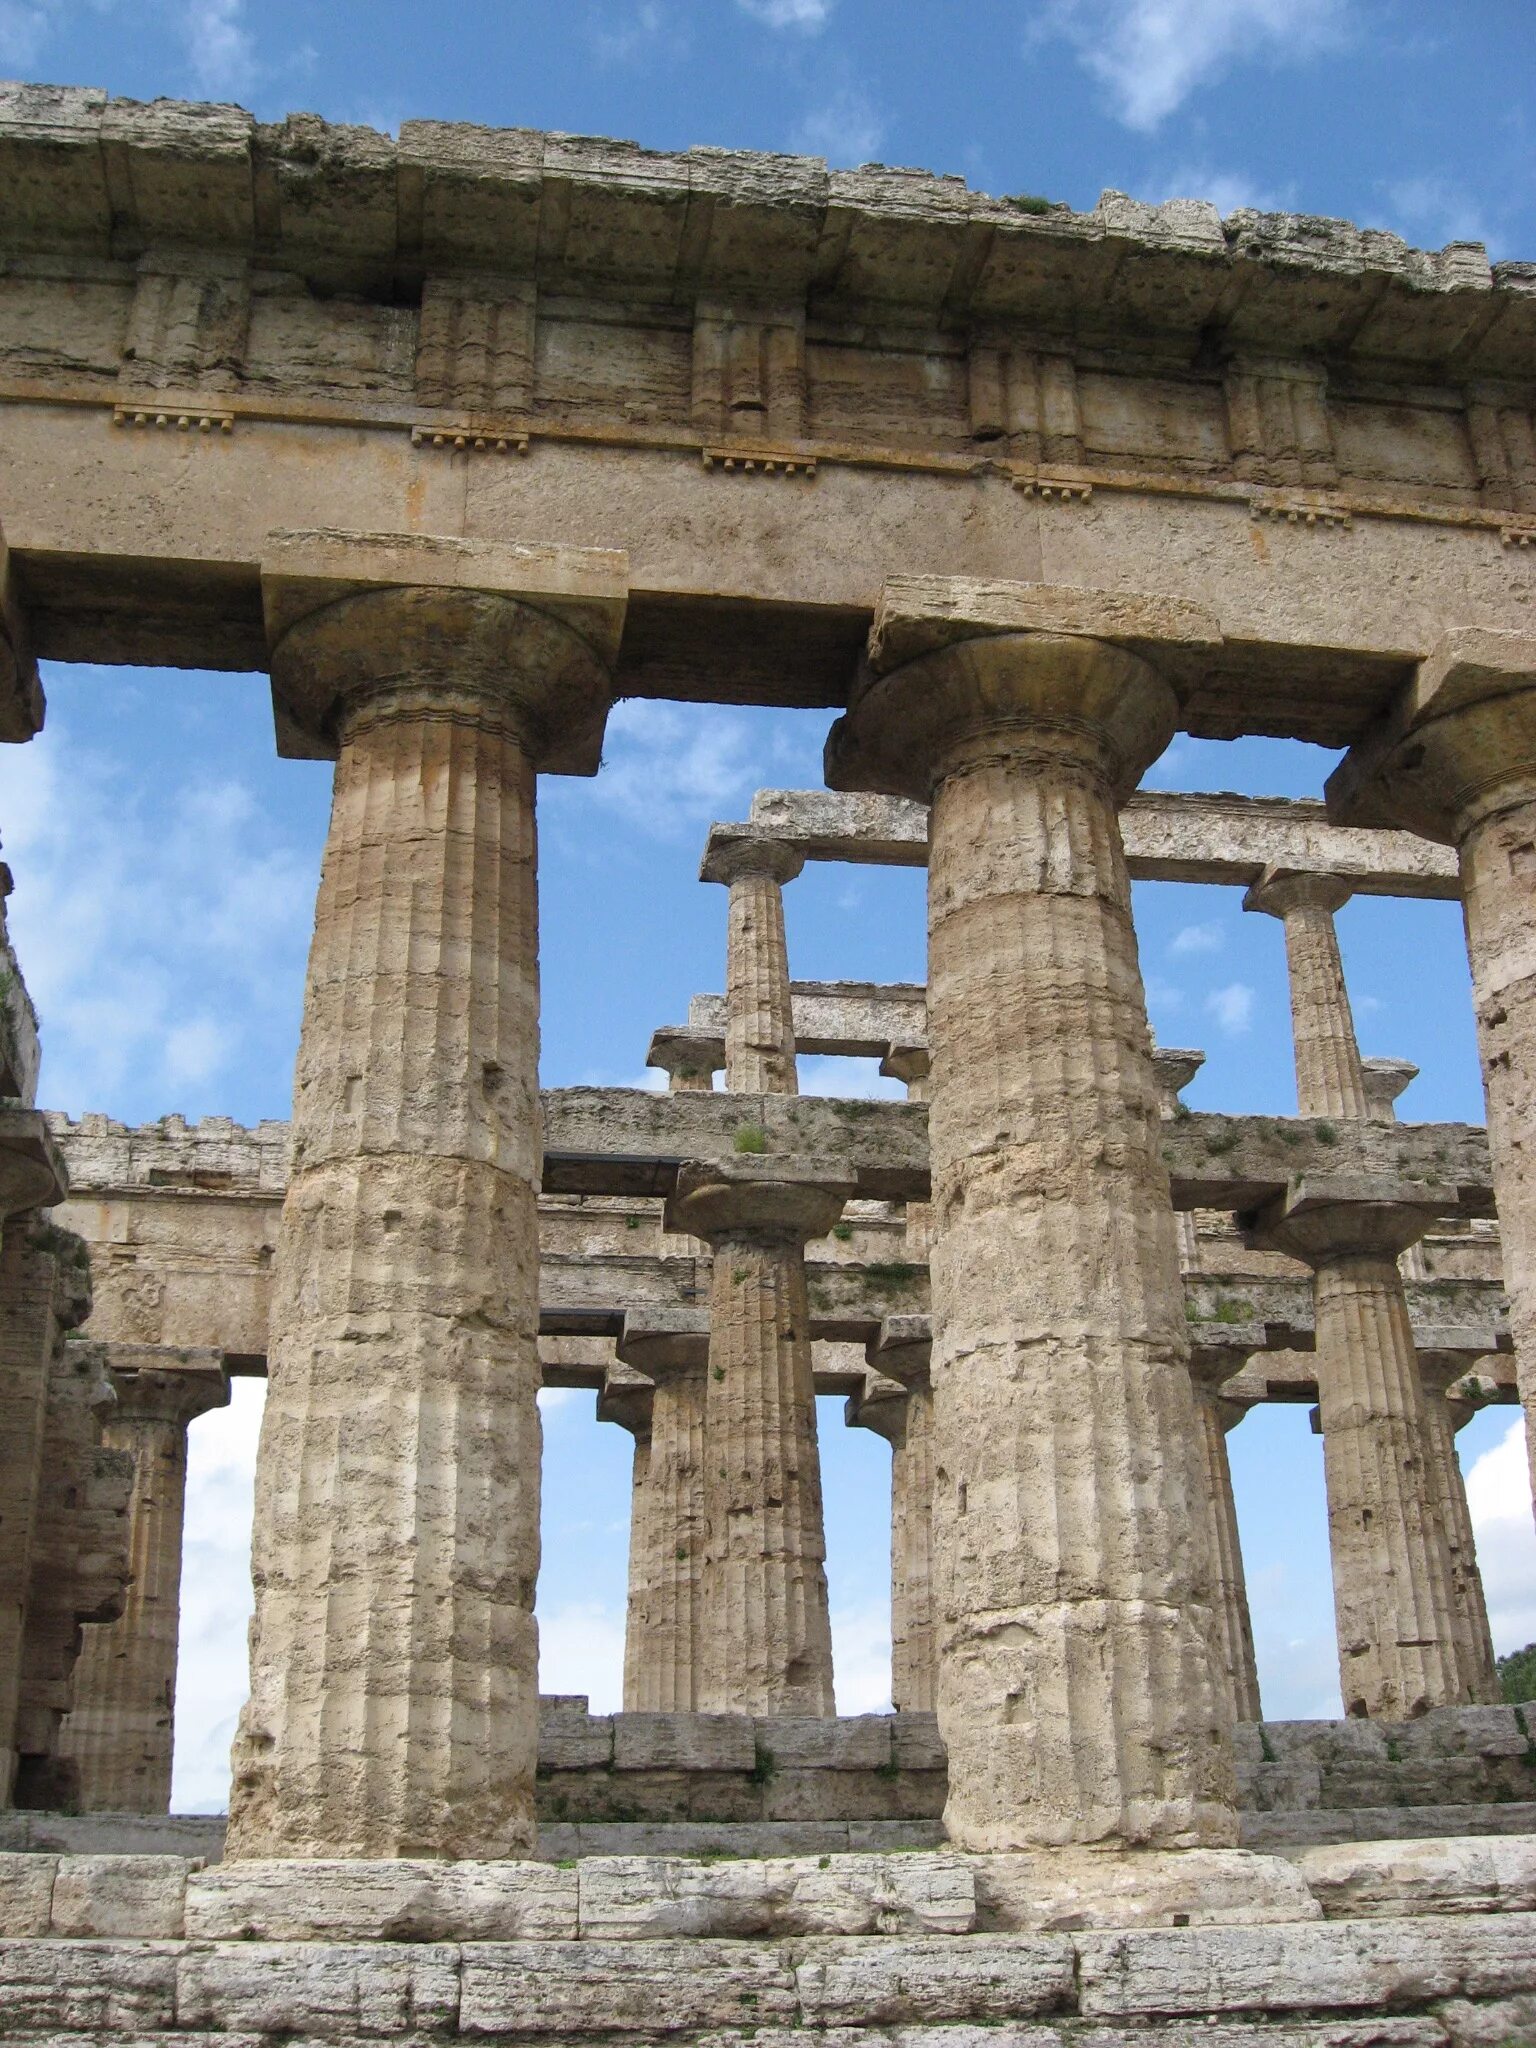 Строения древности. Античный храм Пестум. Паэстум Италия. Атаянц Пестум. Paestum Италия фото.